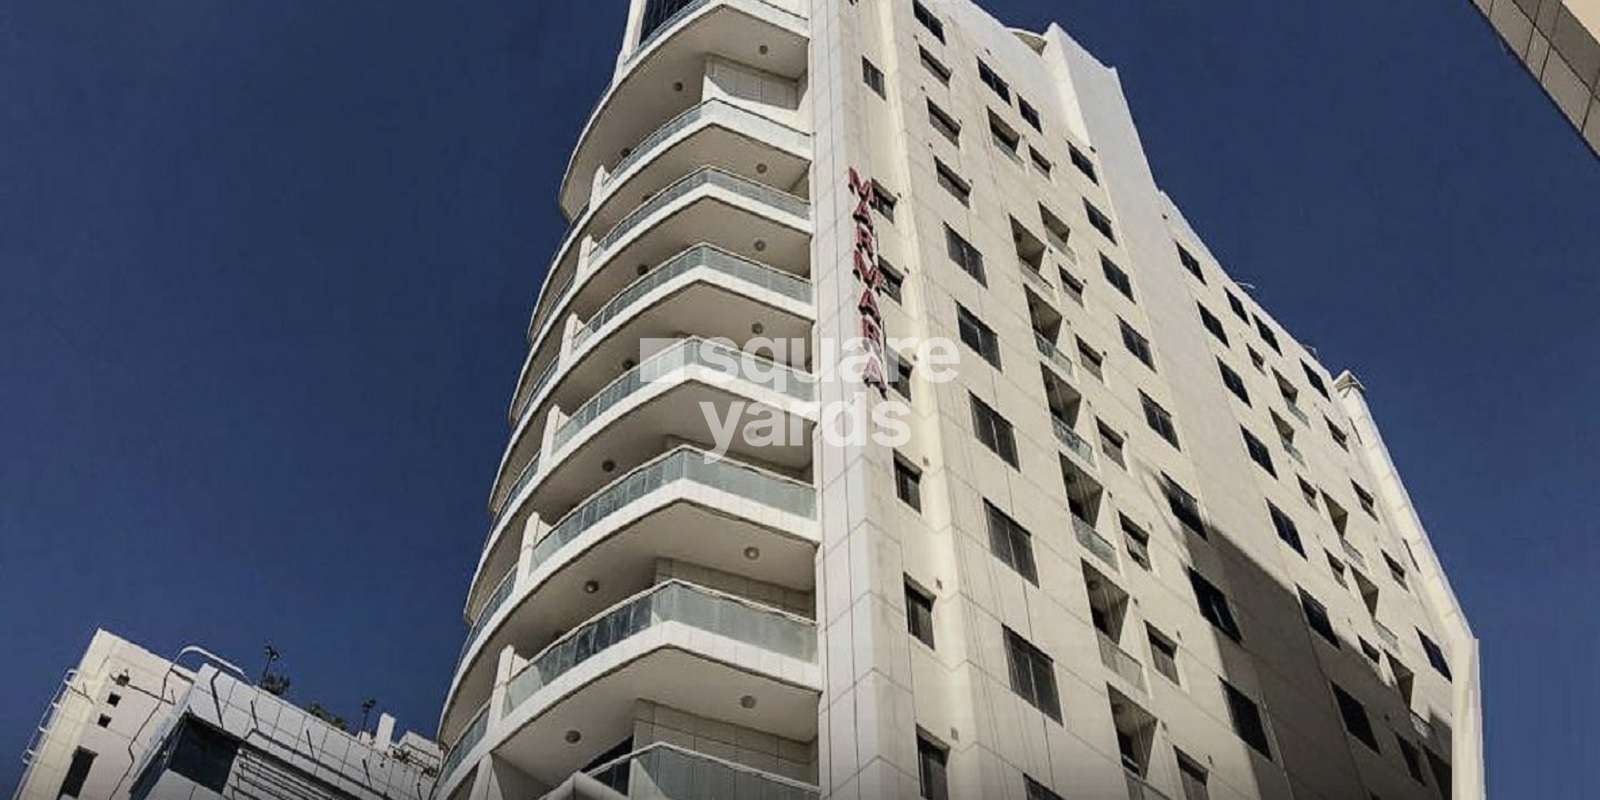 Marmara Hotel Apartments Cover Image